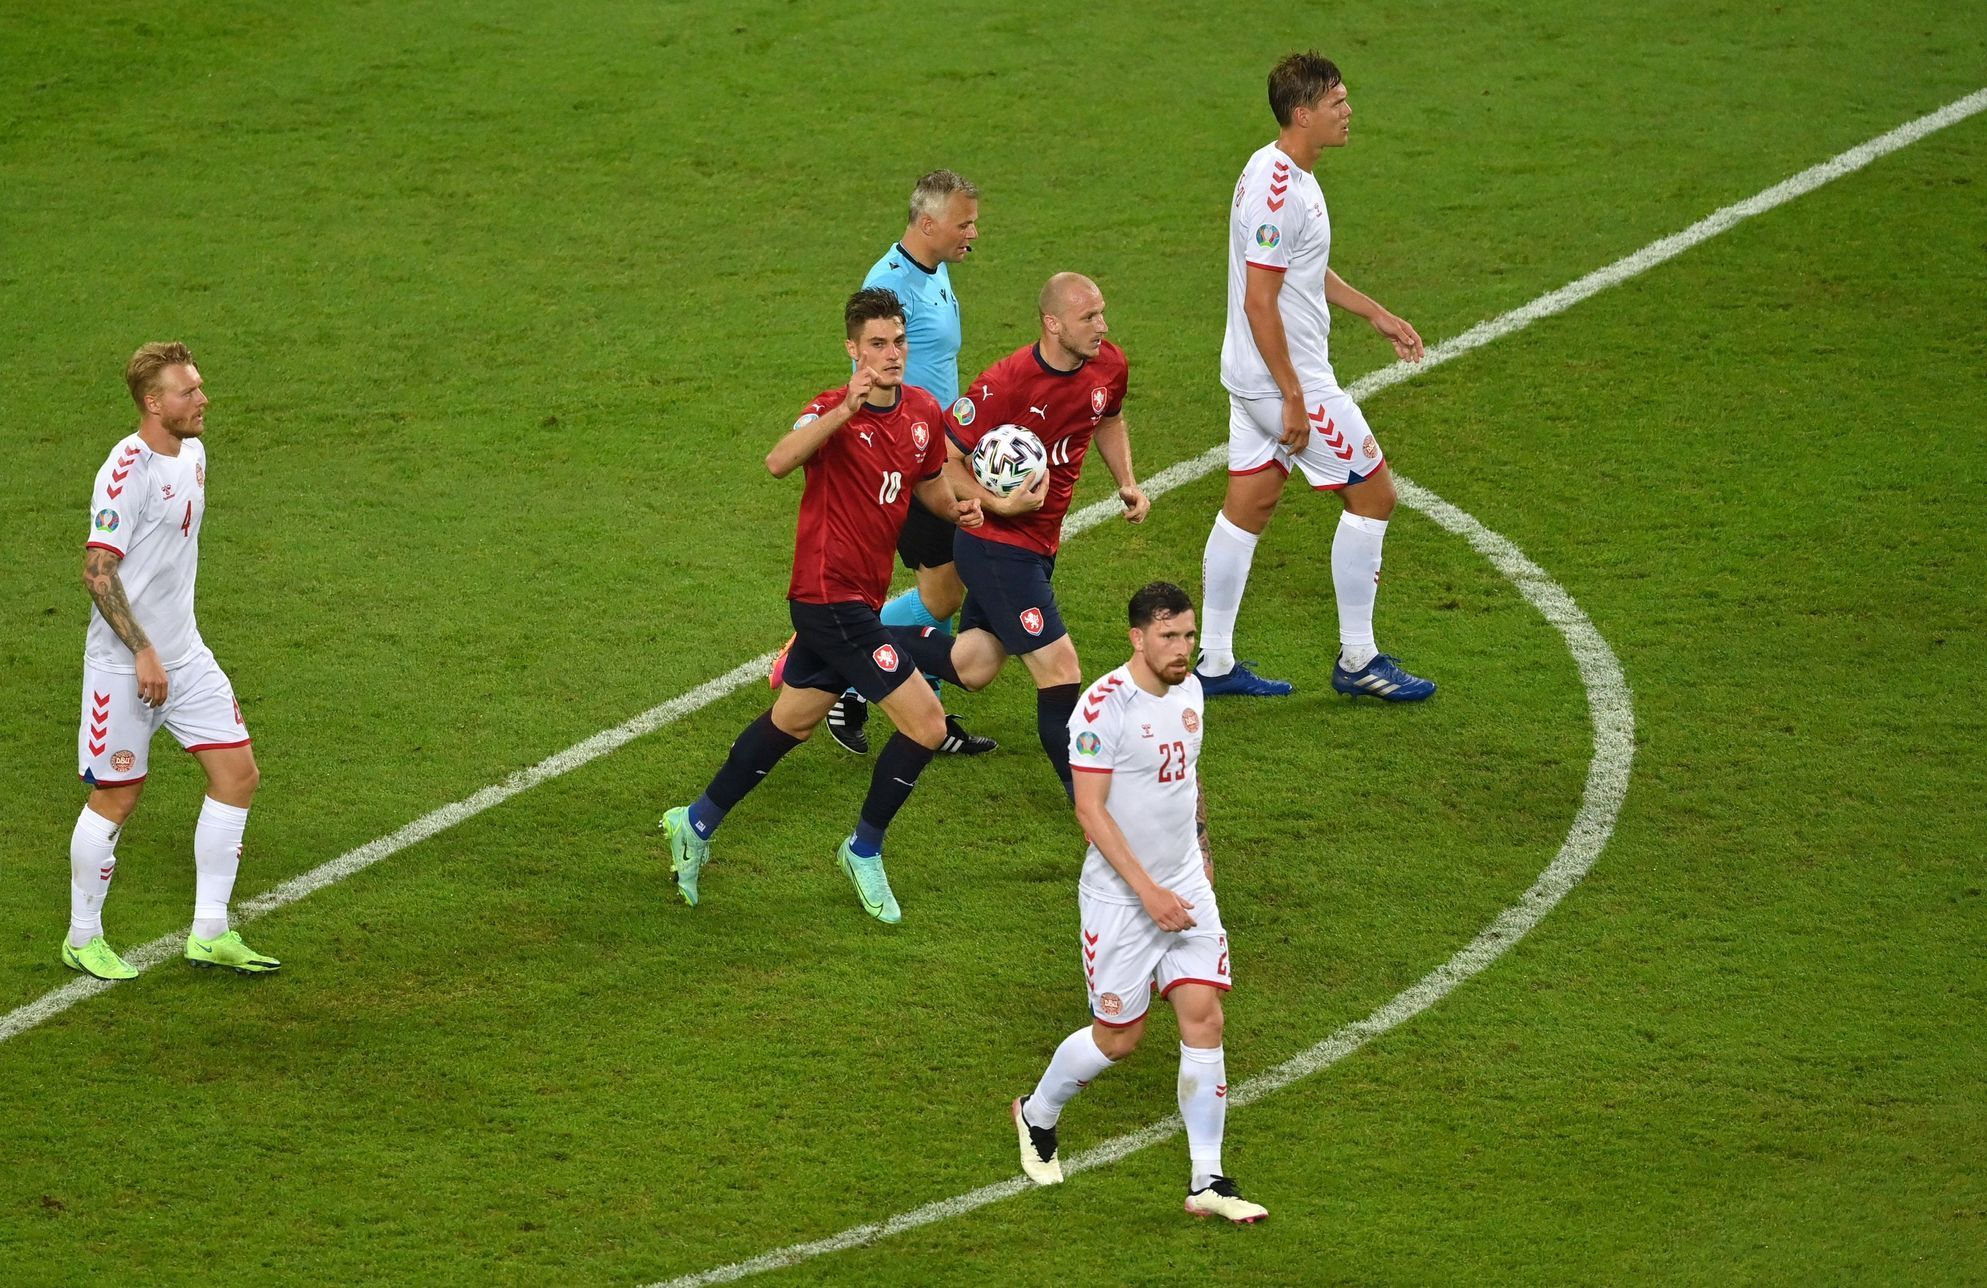 Patrik Schick slaví gól ve čtvrtfinále Česko - Dánsko na ME 2020